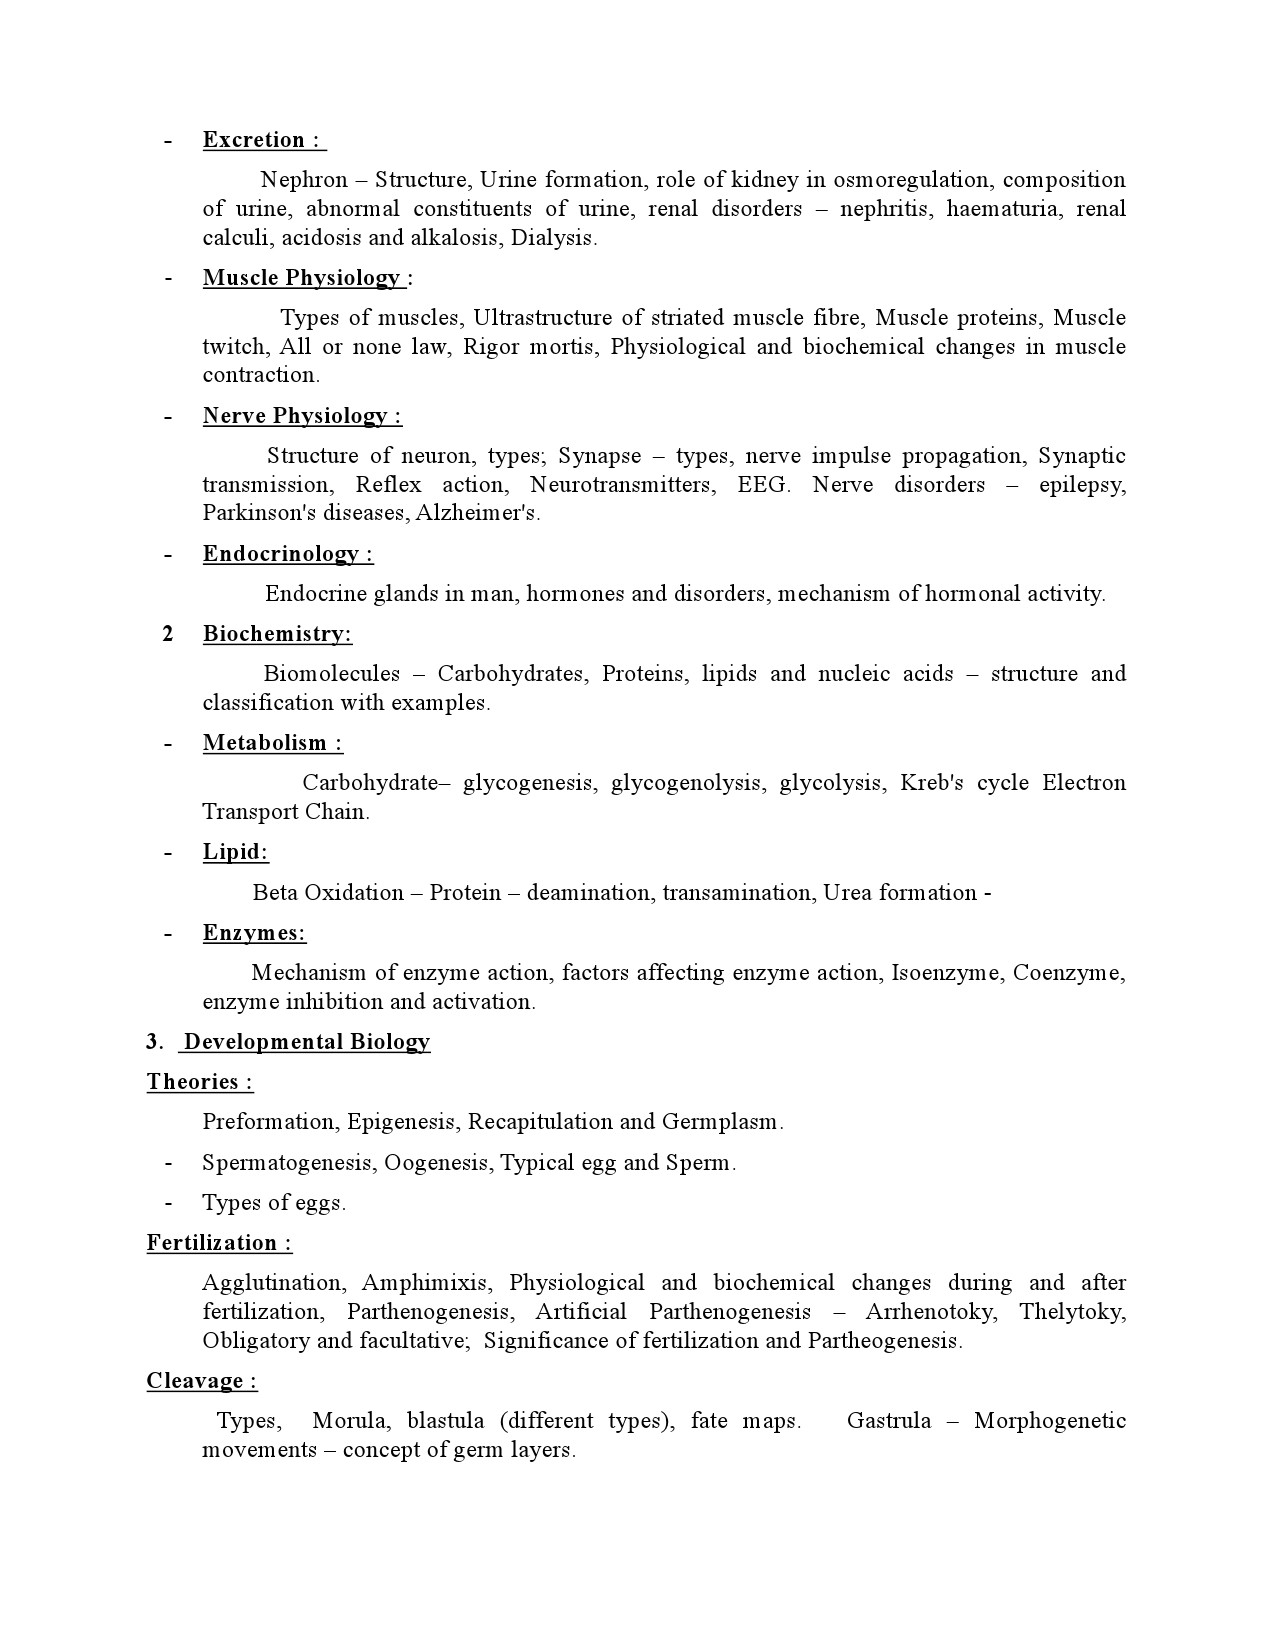 High School Assistant Natural Science Part A Kerala Examination Syllabus 2021 - Notification Image 5